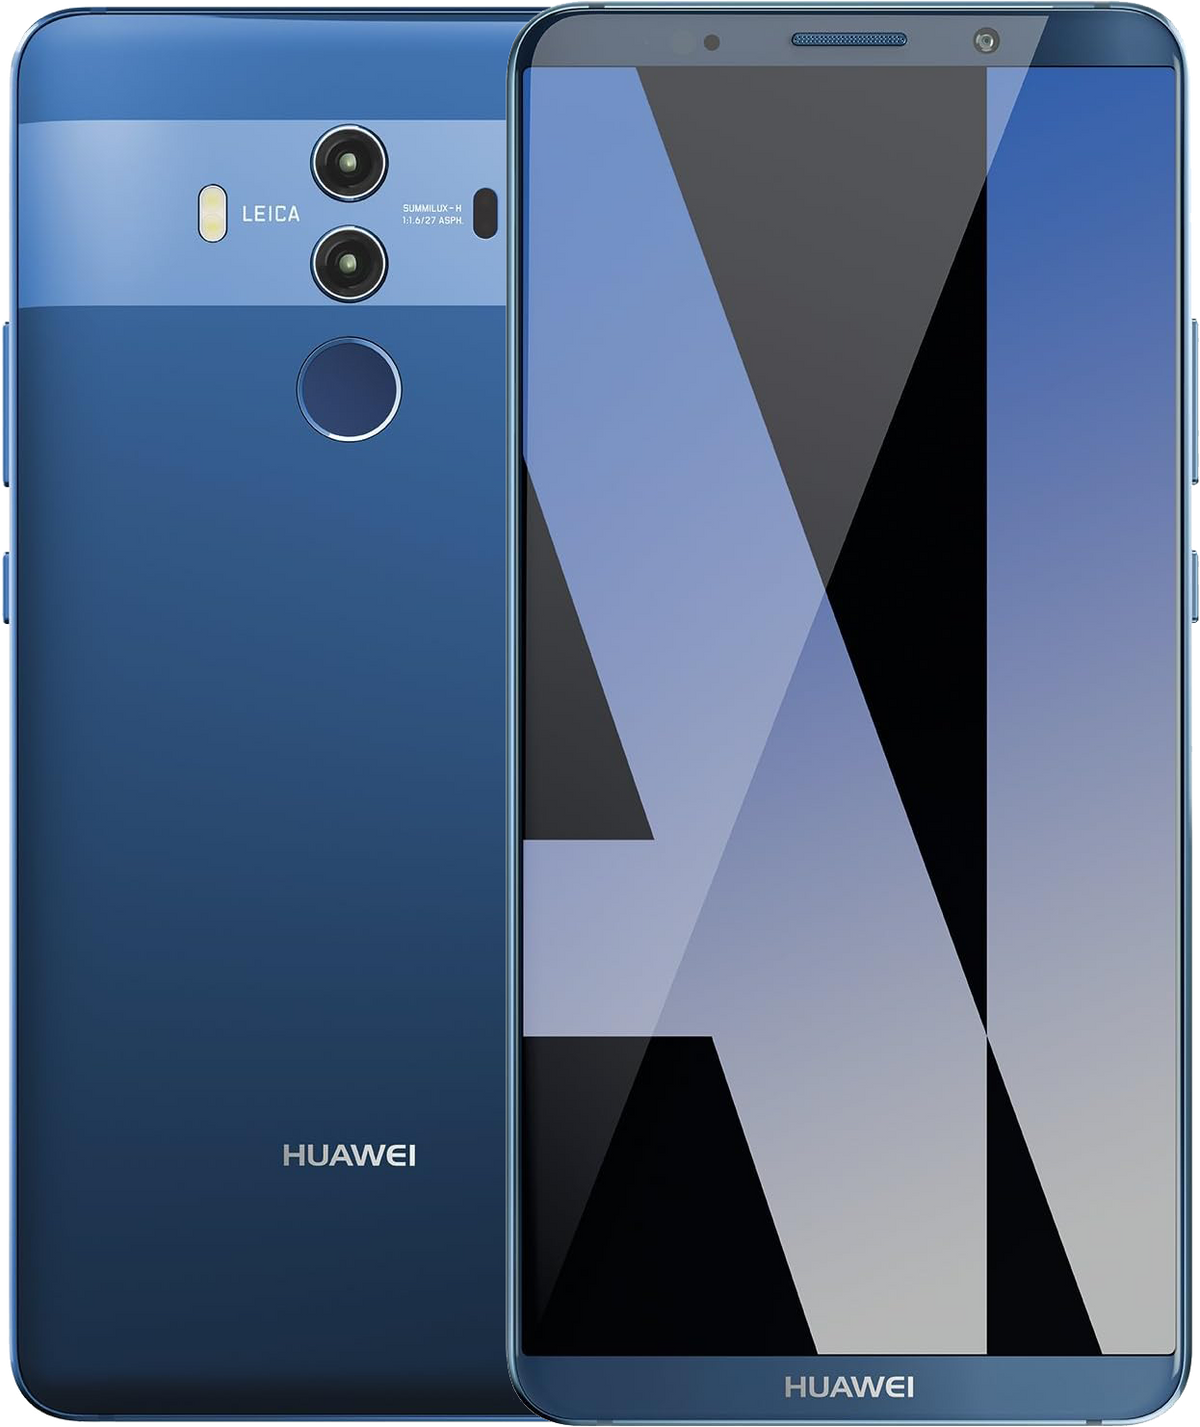 Huawei Mate 10 Pro blau - Onhe Vertrag